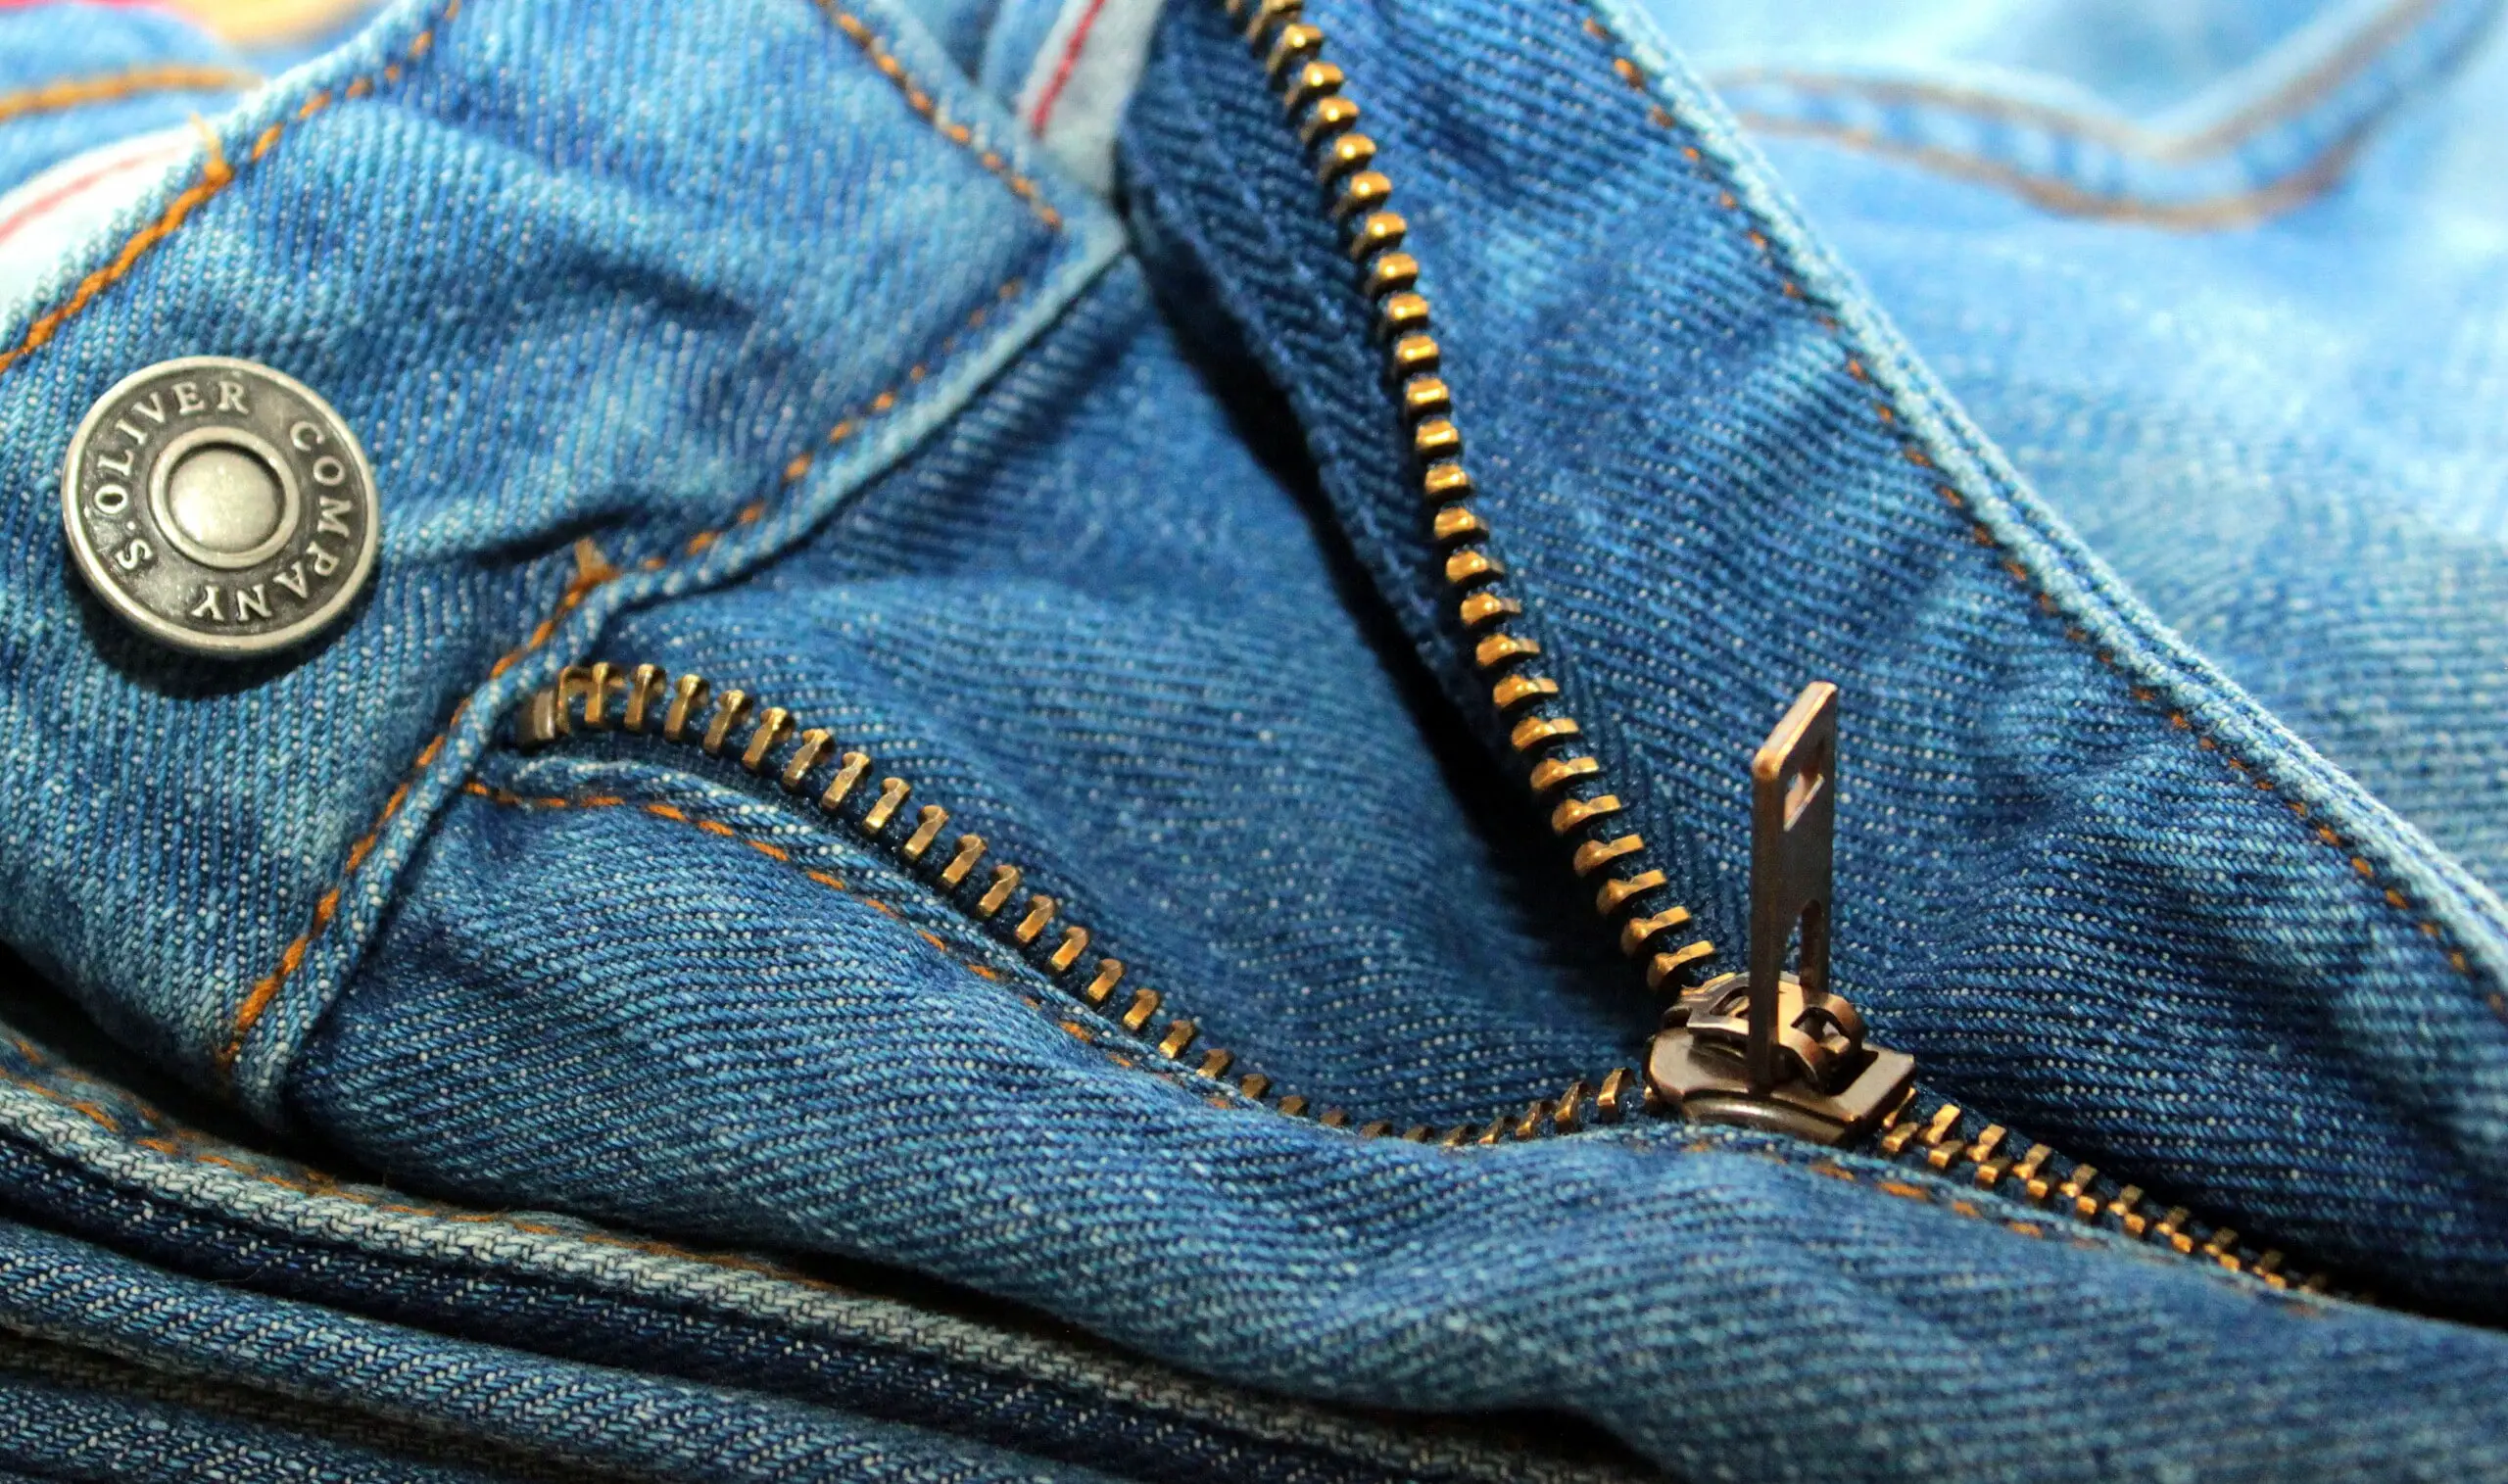 zip, jeans, jean button